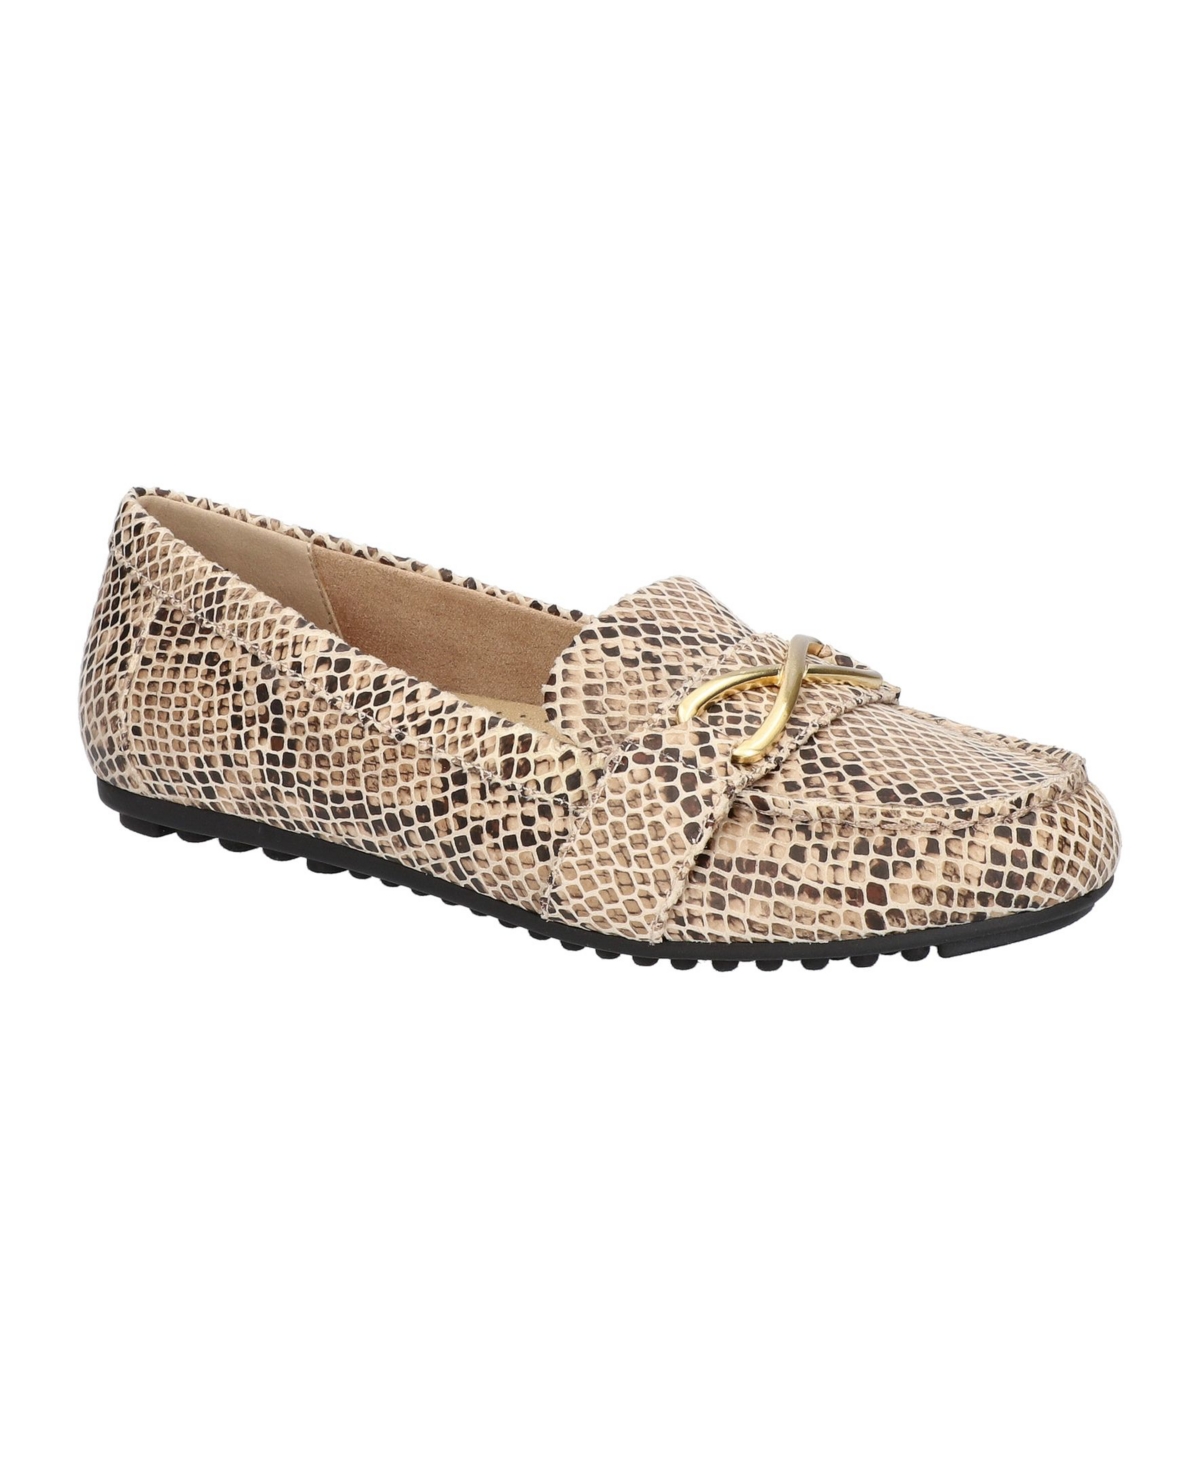 Women's Susmita Comfort Loafers - Almond Suede Leather